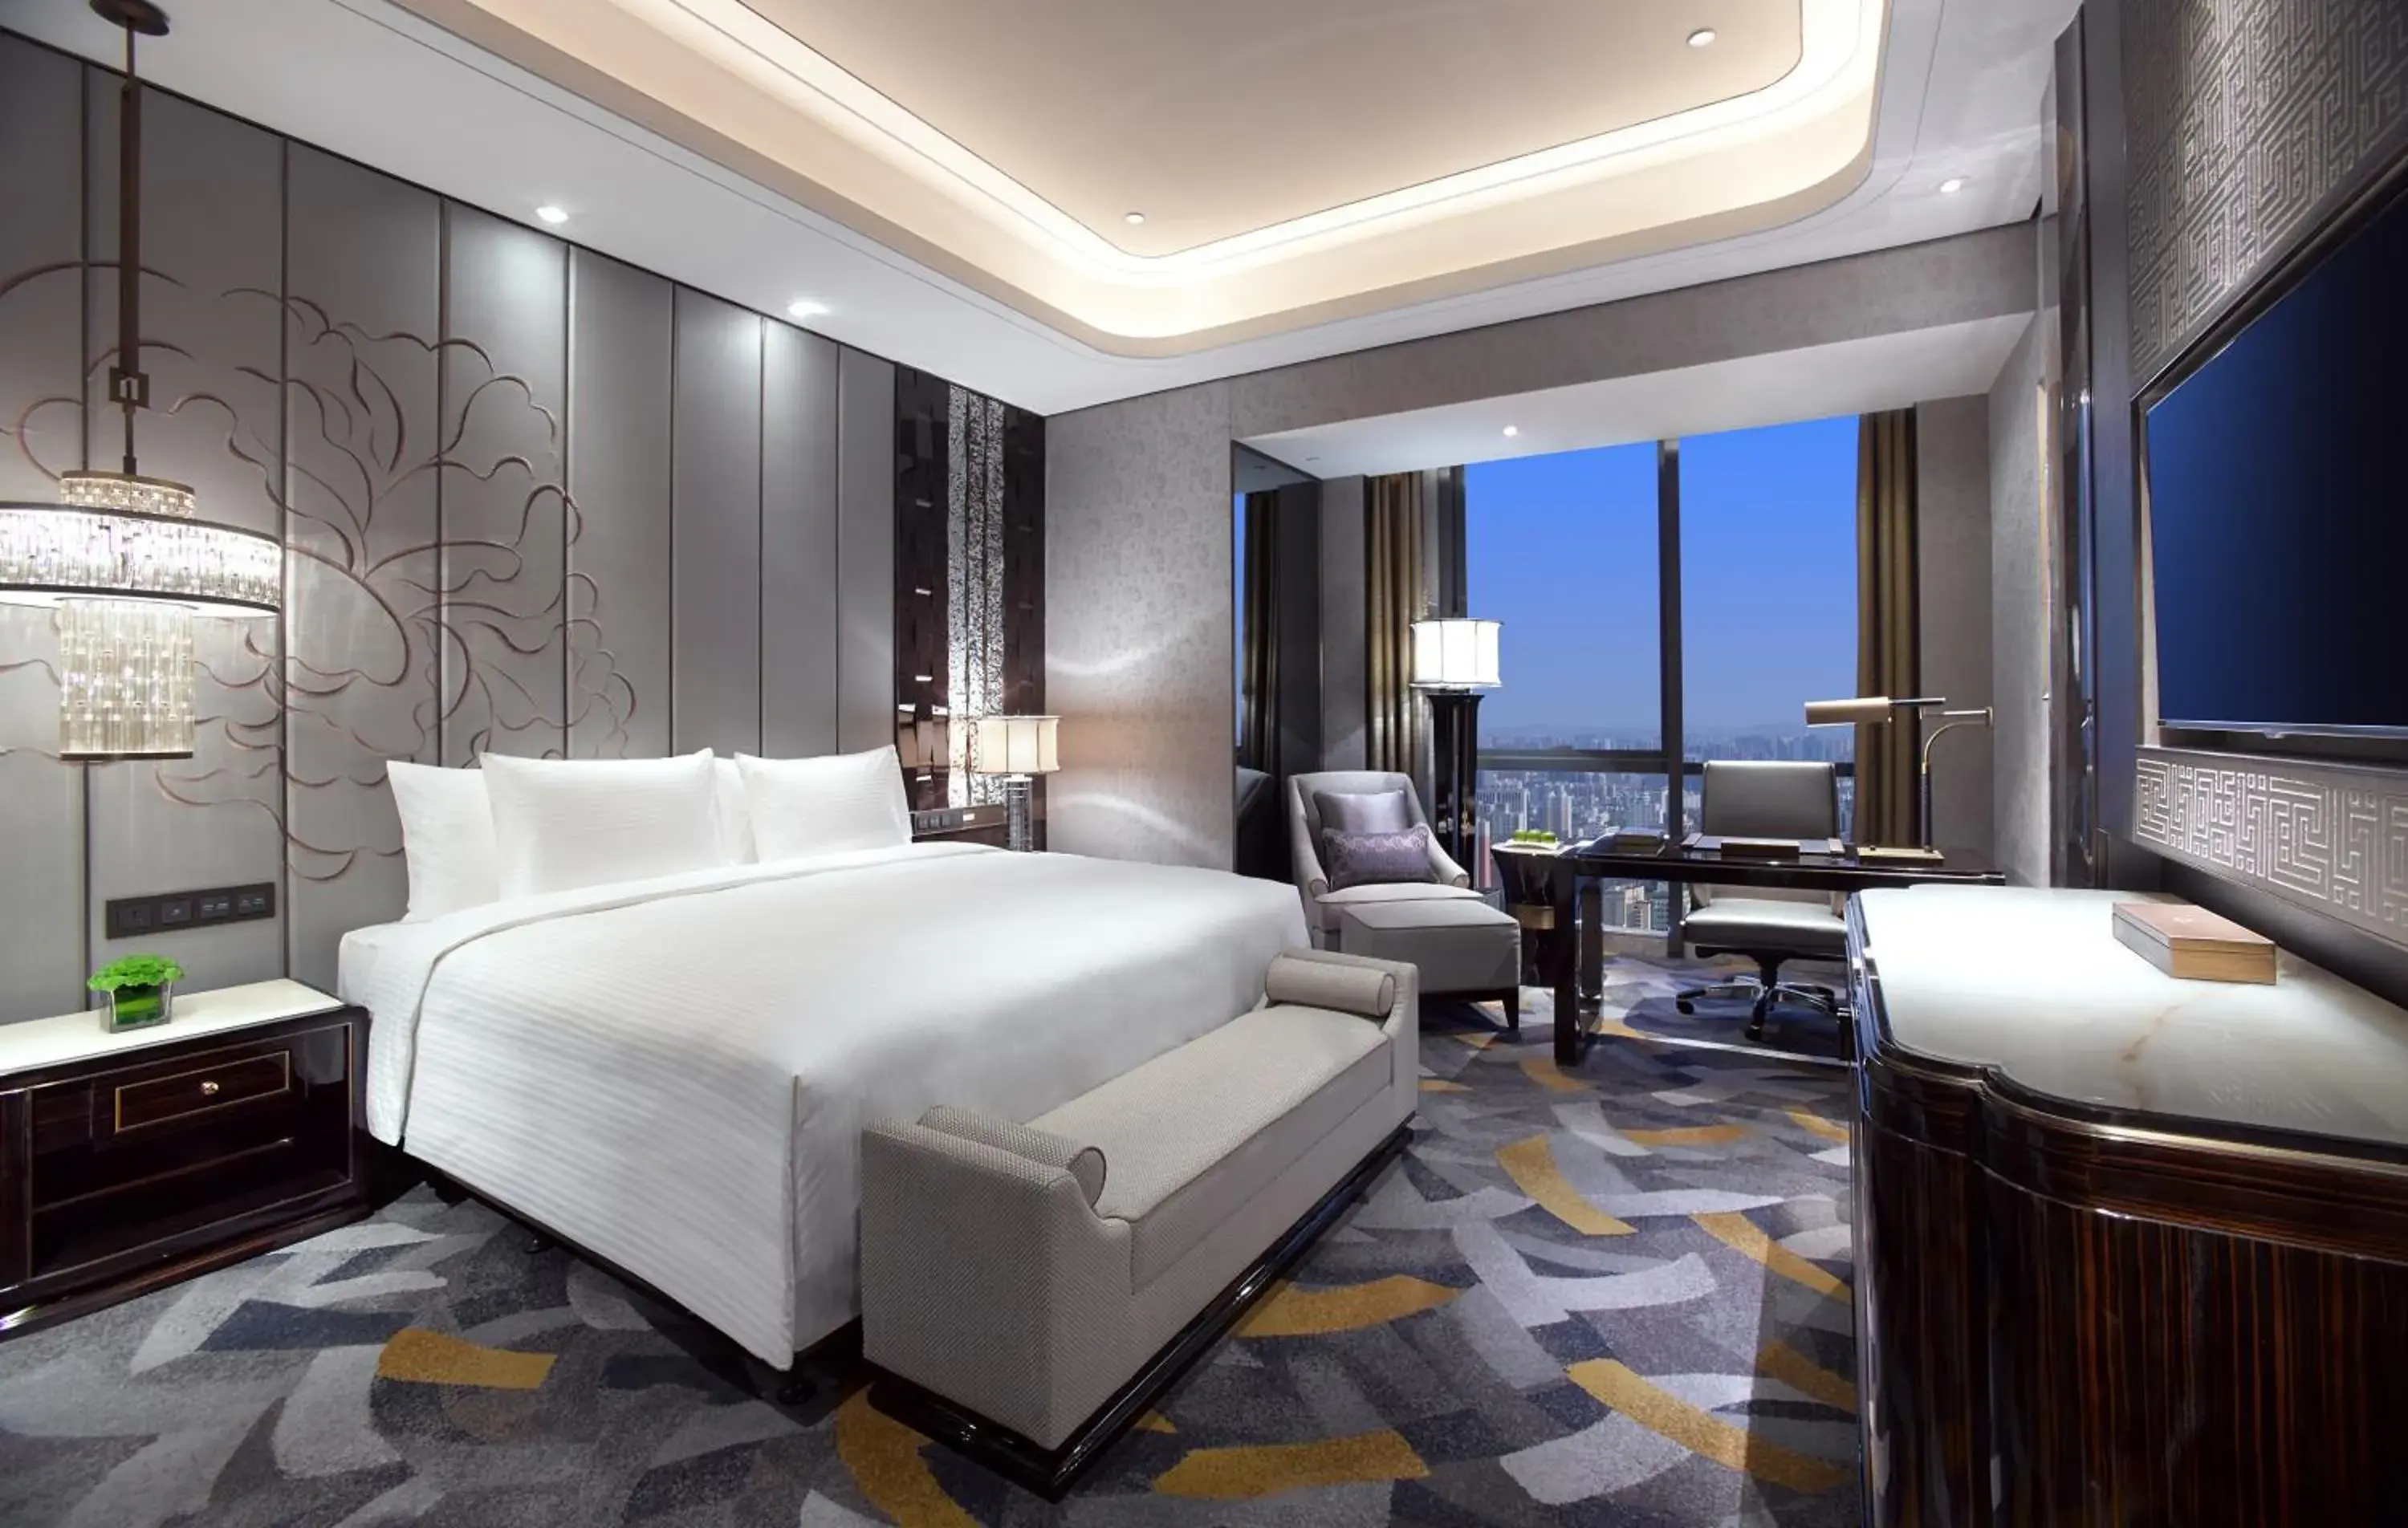 Bedroom in Wanda Vista Zhengzhou